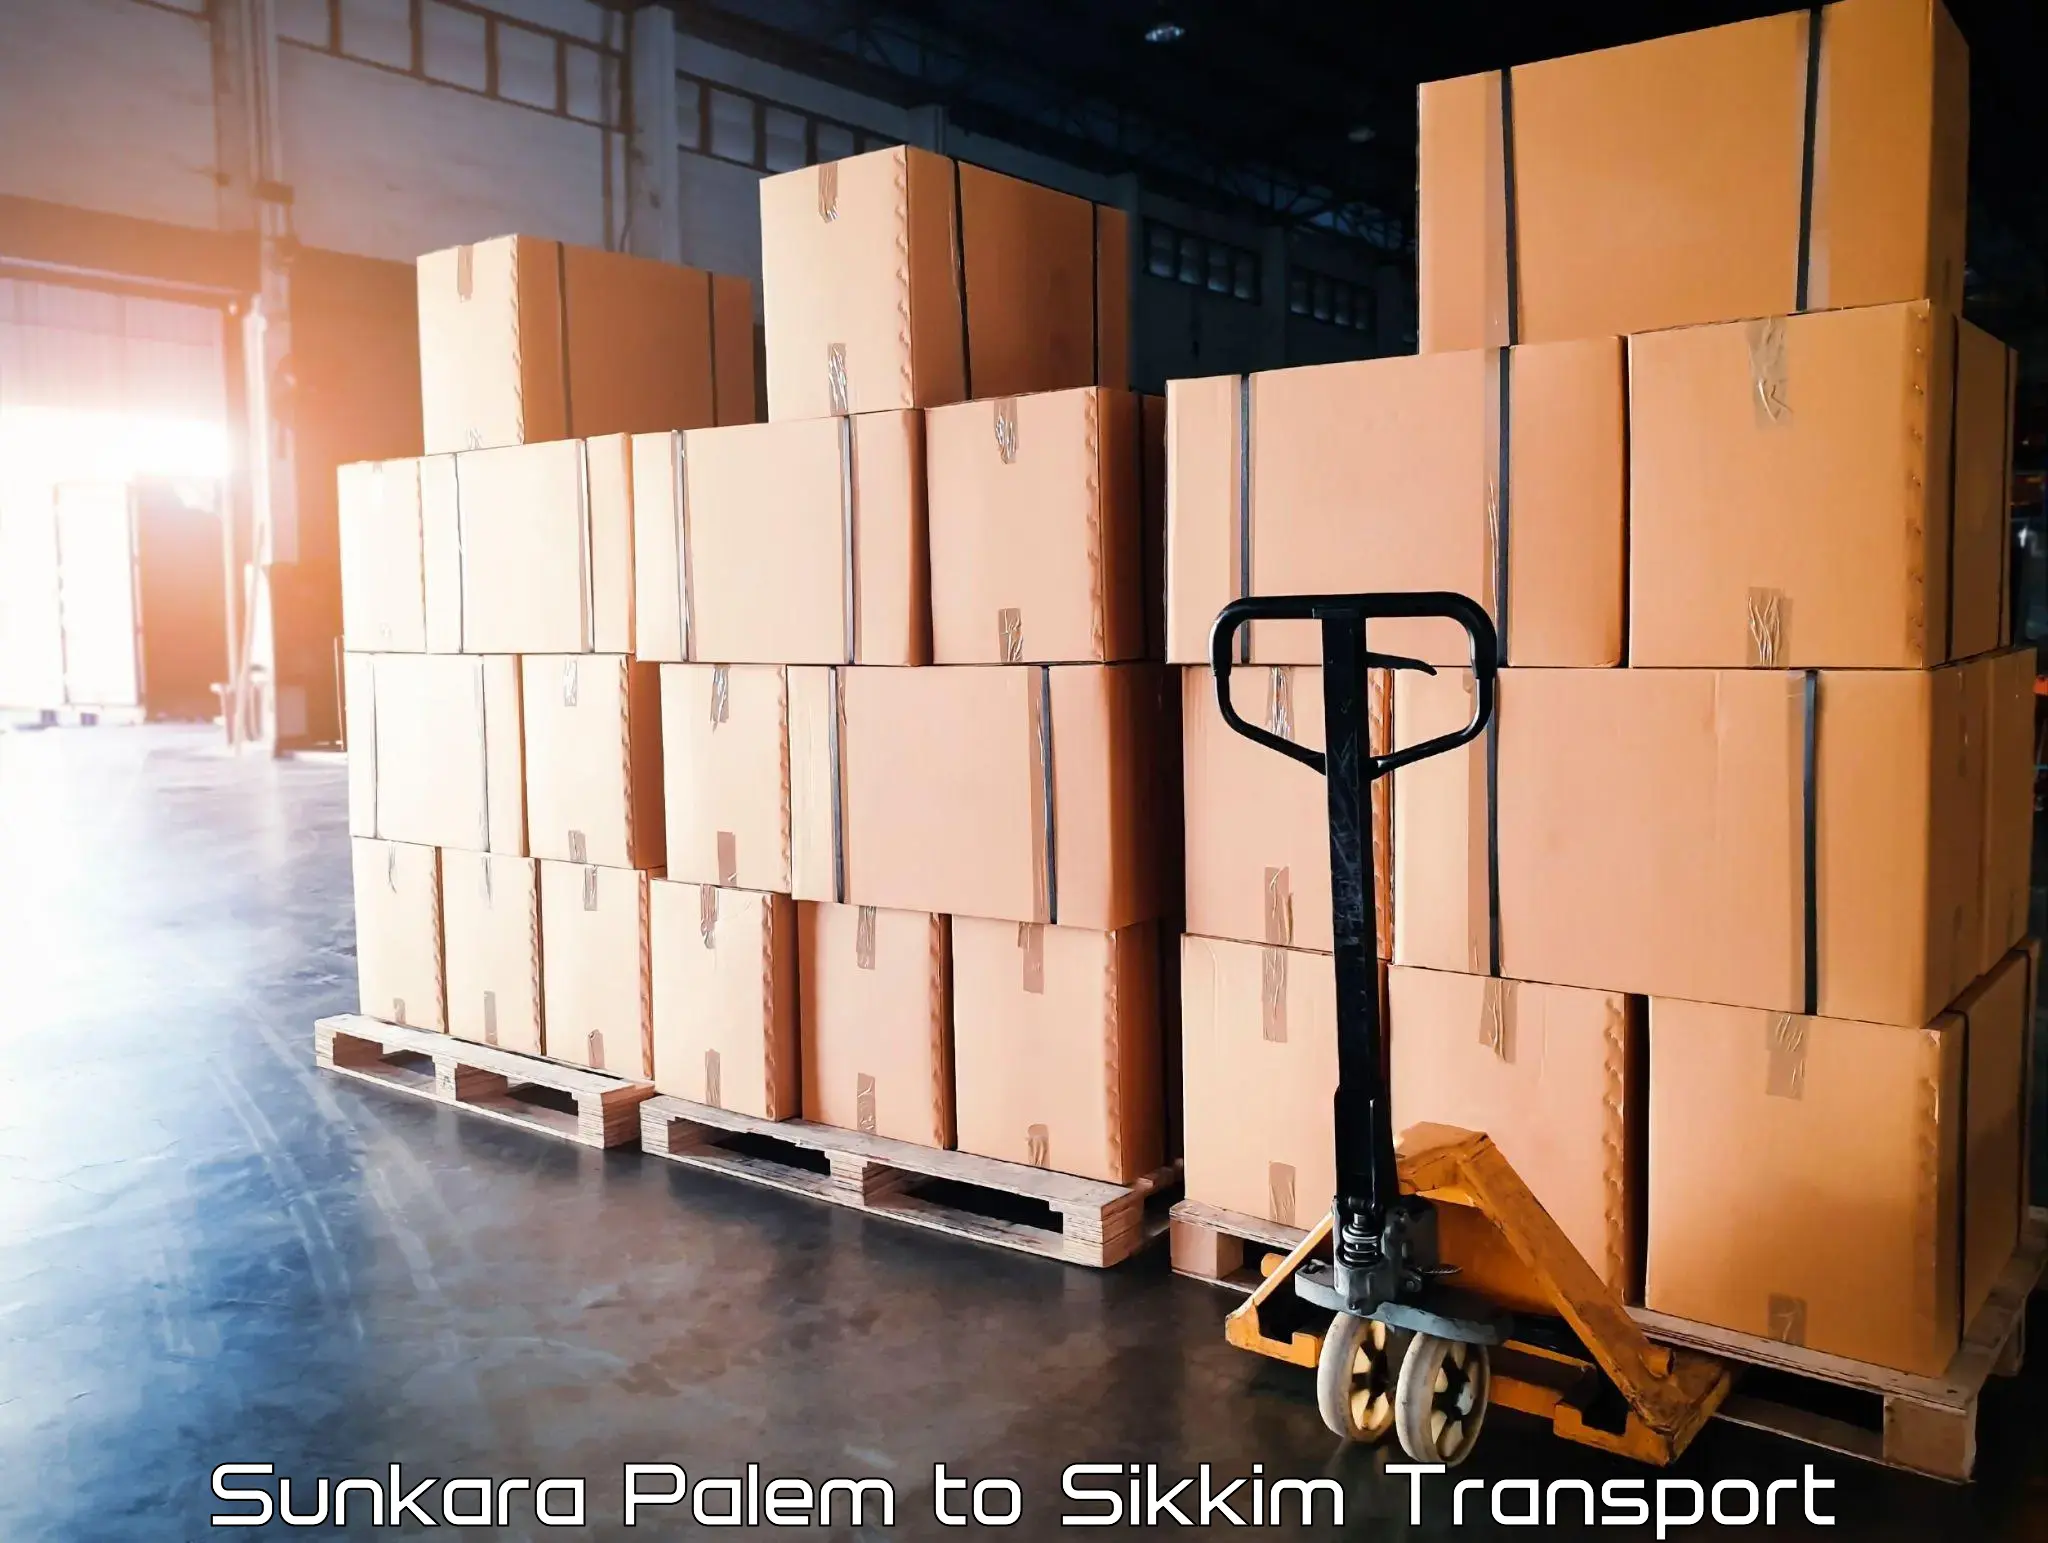 Sending bike to another city Sunkara Palem to South Sikkim